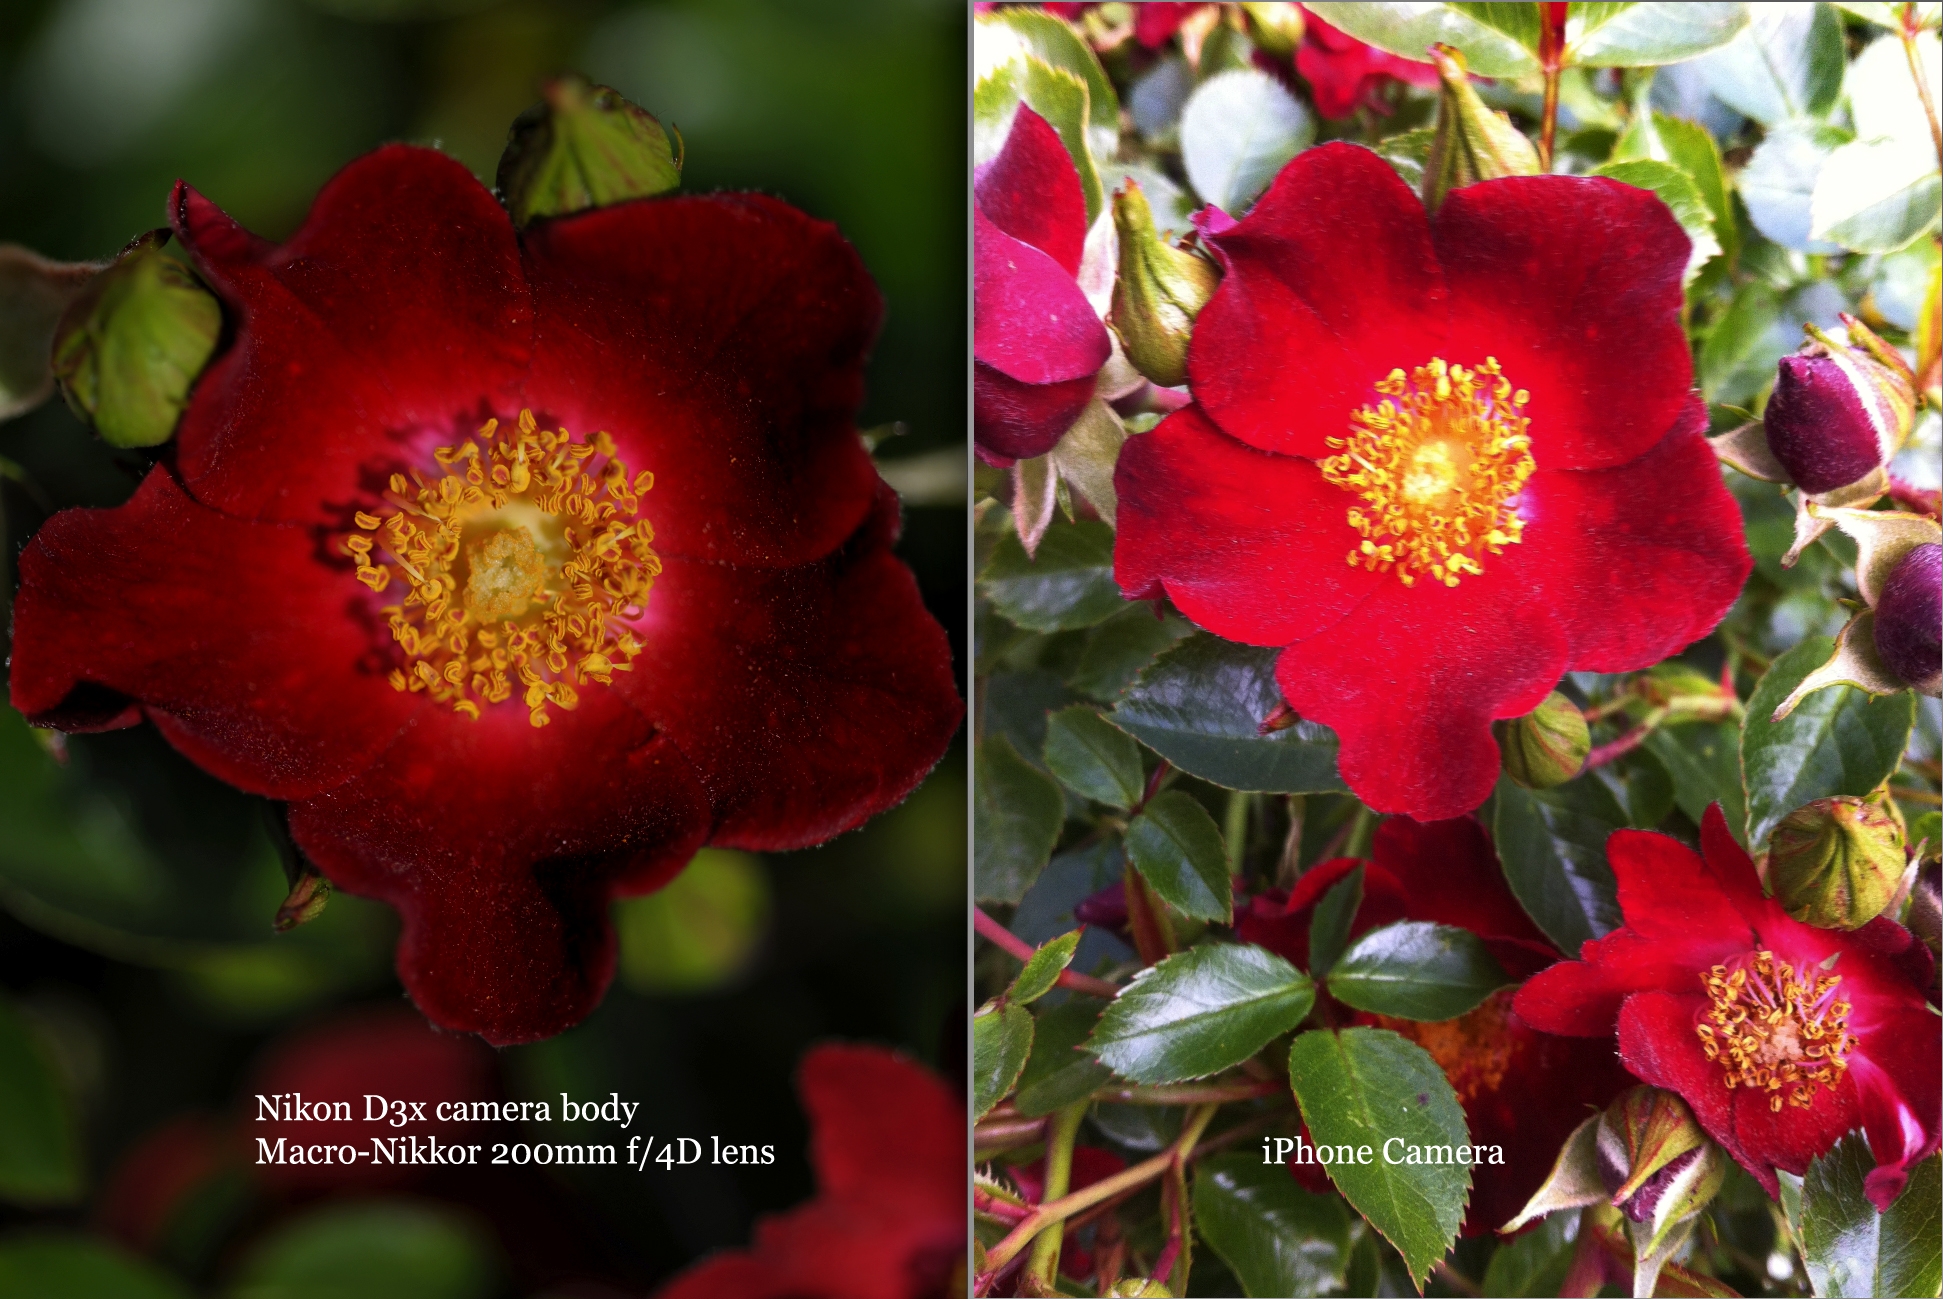 Comparison Photo Nikon D3x vs iPhone Camera